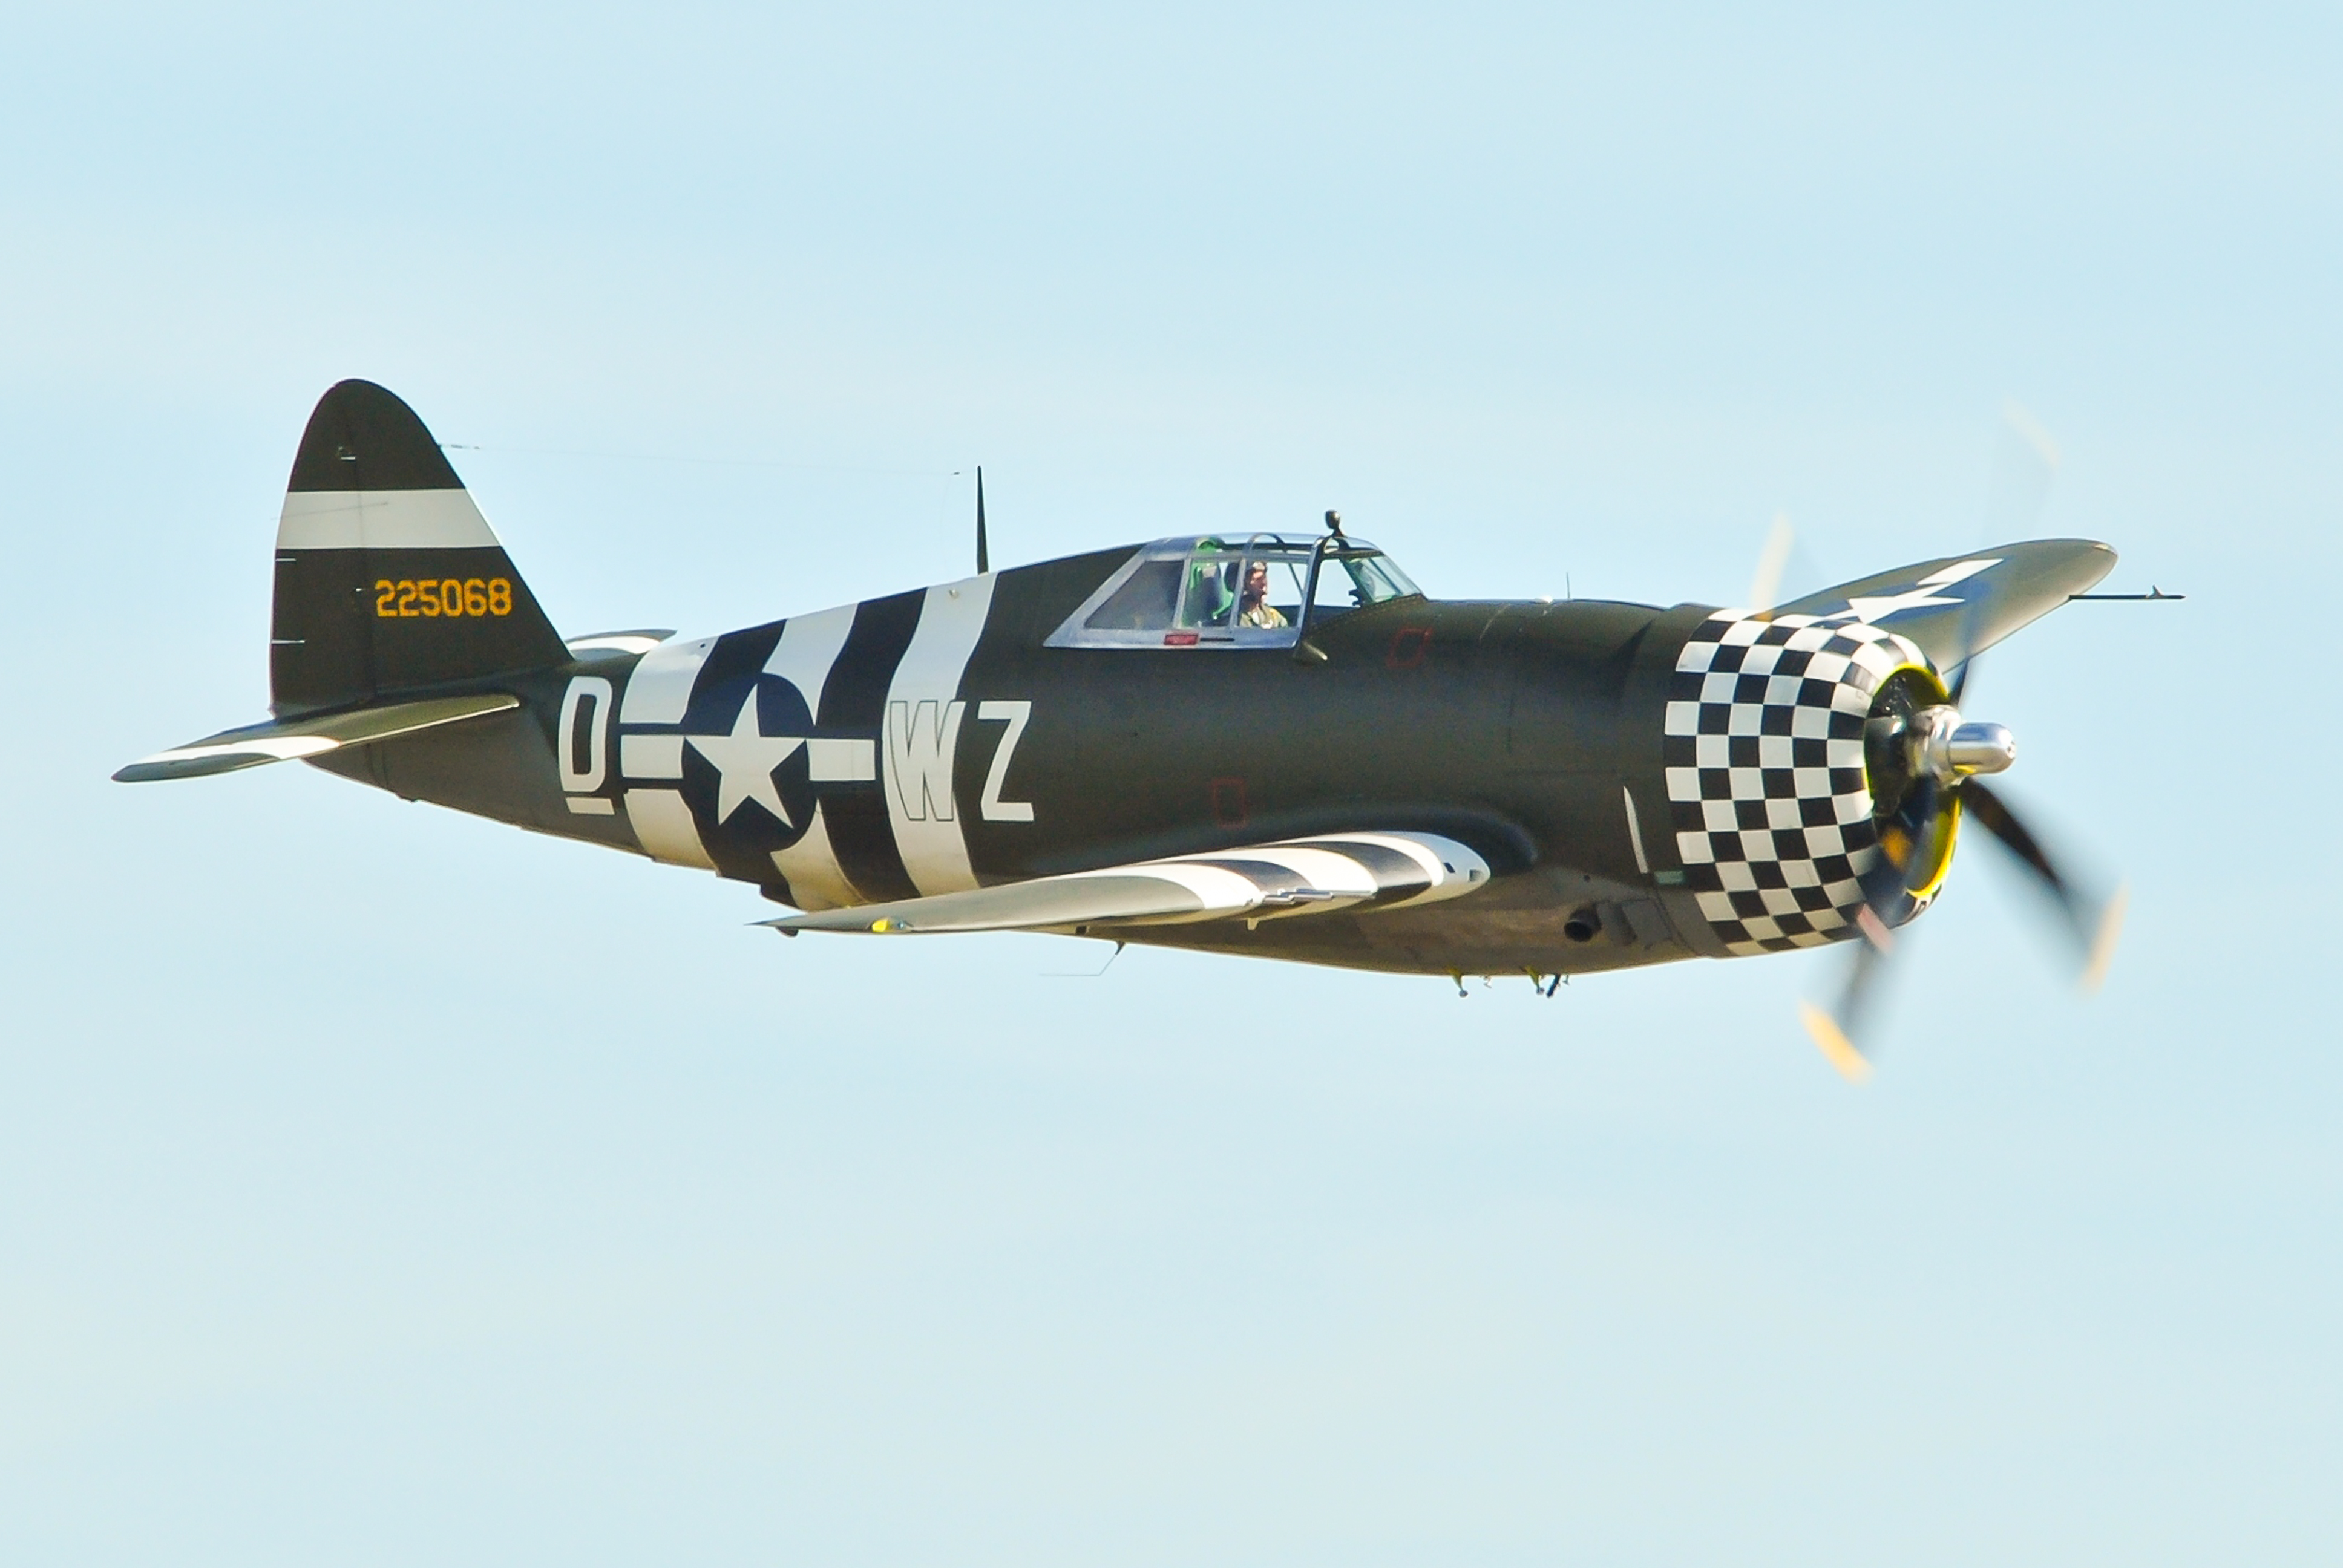 Amazing Republic P-47 Thunderbolt Pictures & Backgrounds